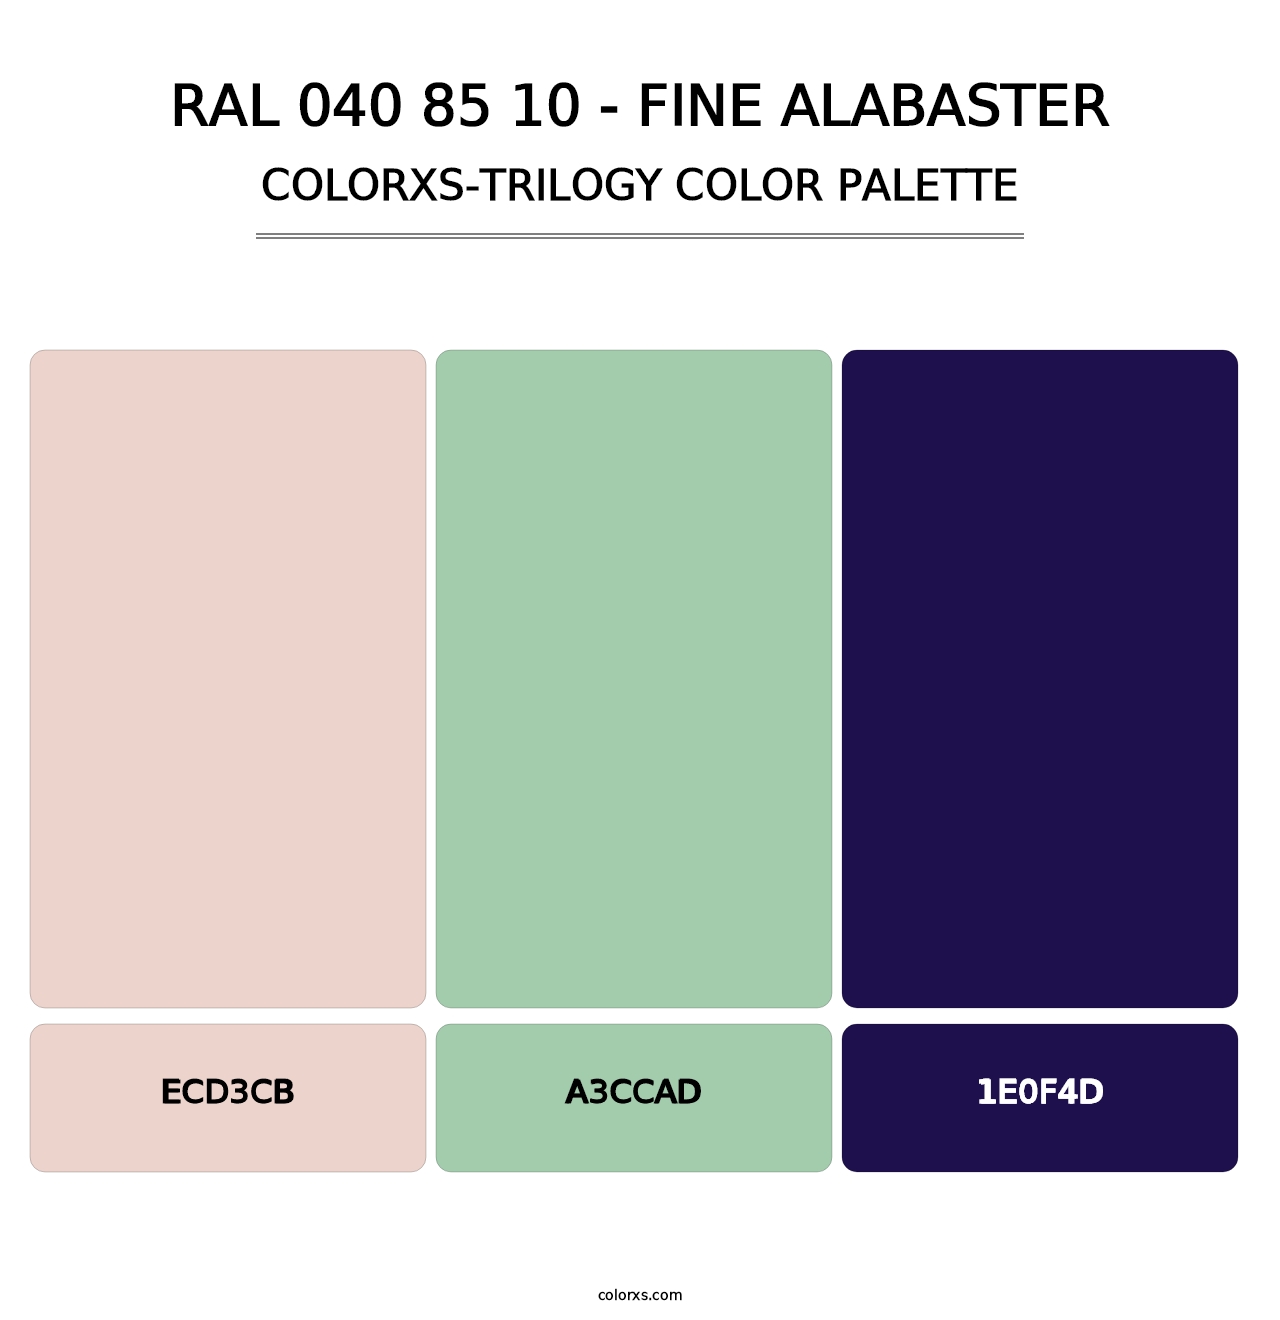 RAL 040 85 10 - Fine Alabaster - Colorxs Trilogy Palette